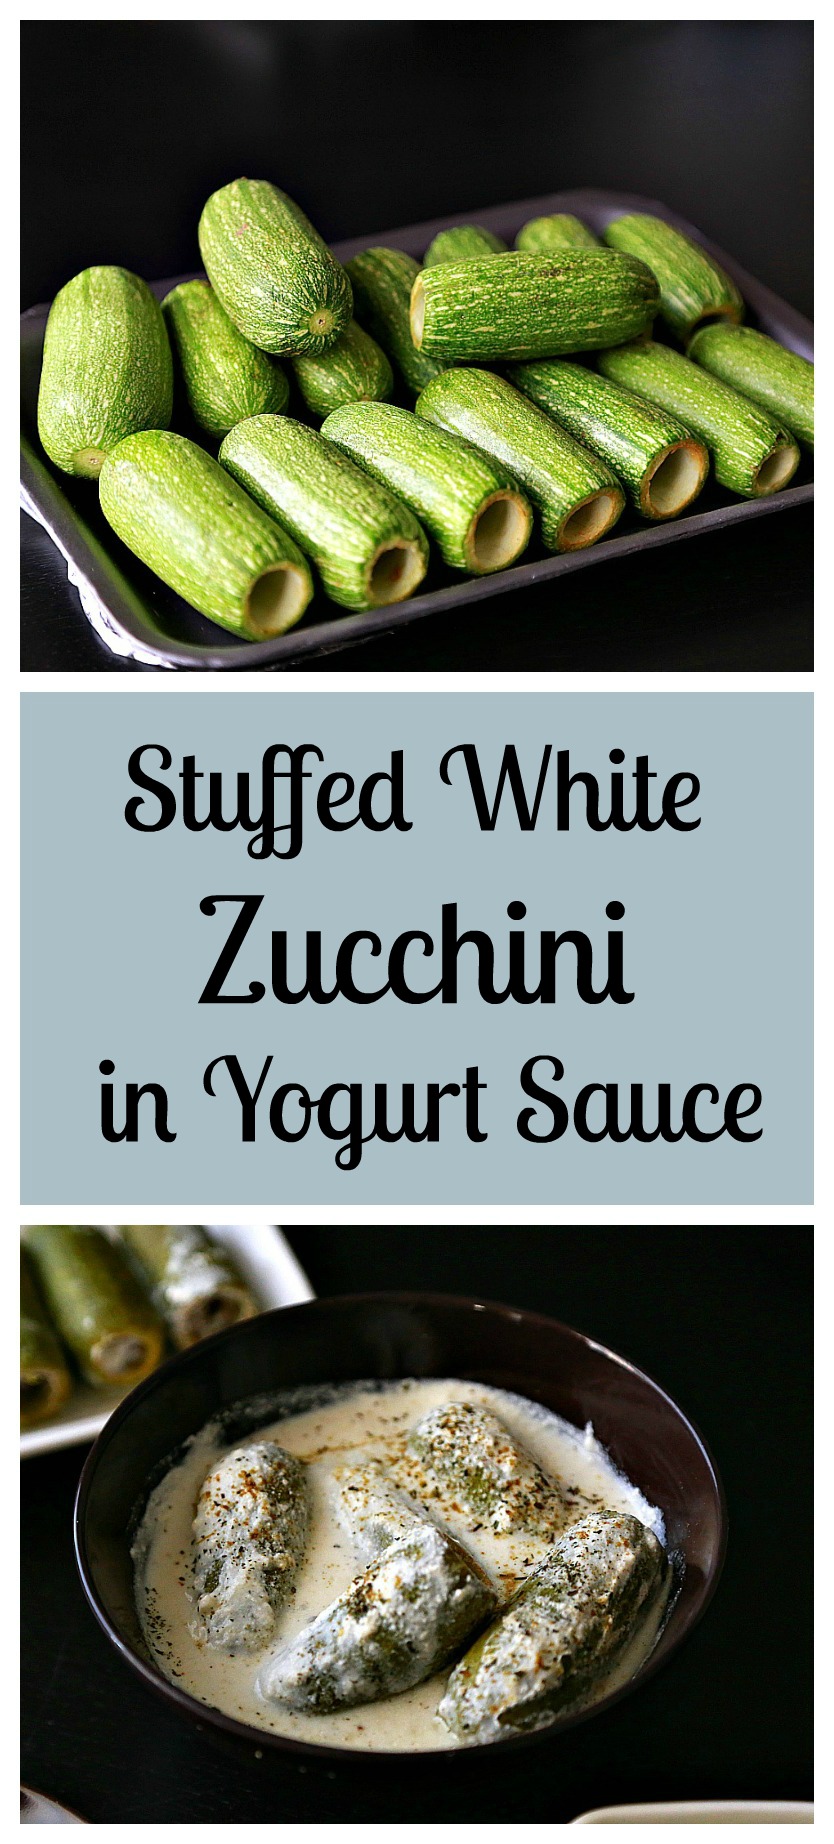 Zucchini collage 1 edited